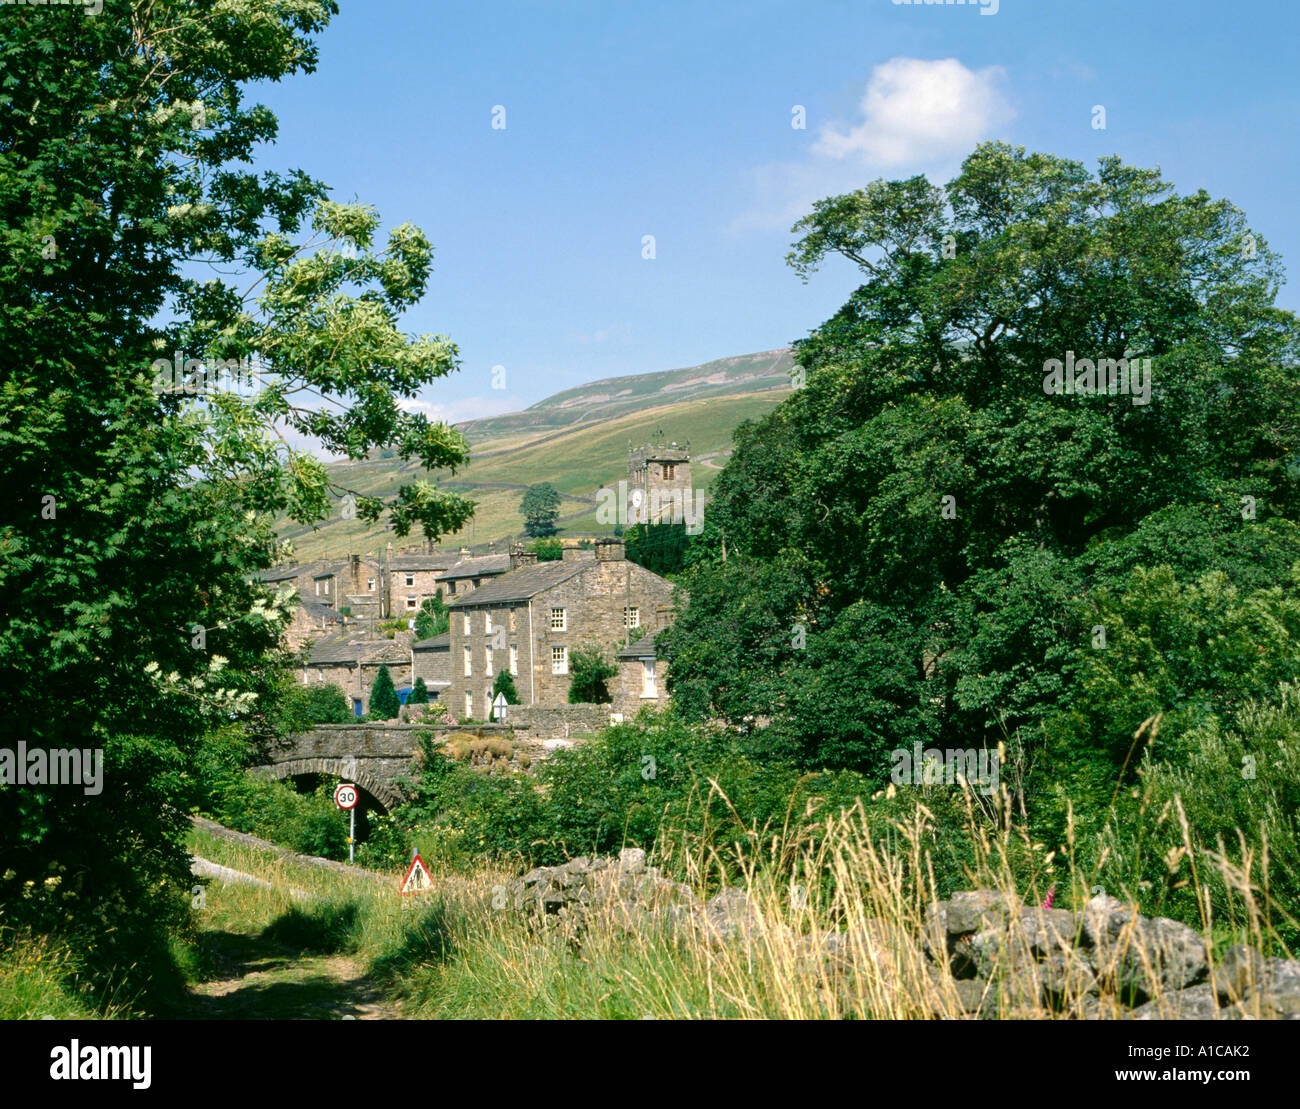 Village of Muker, Upper Swaledale, Yorkshire Dales National Park, North Yorkshire, England, UK. Stock Photo